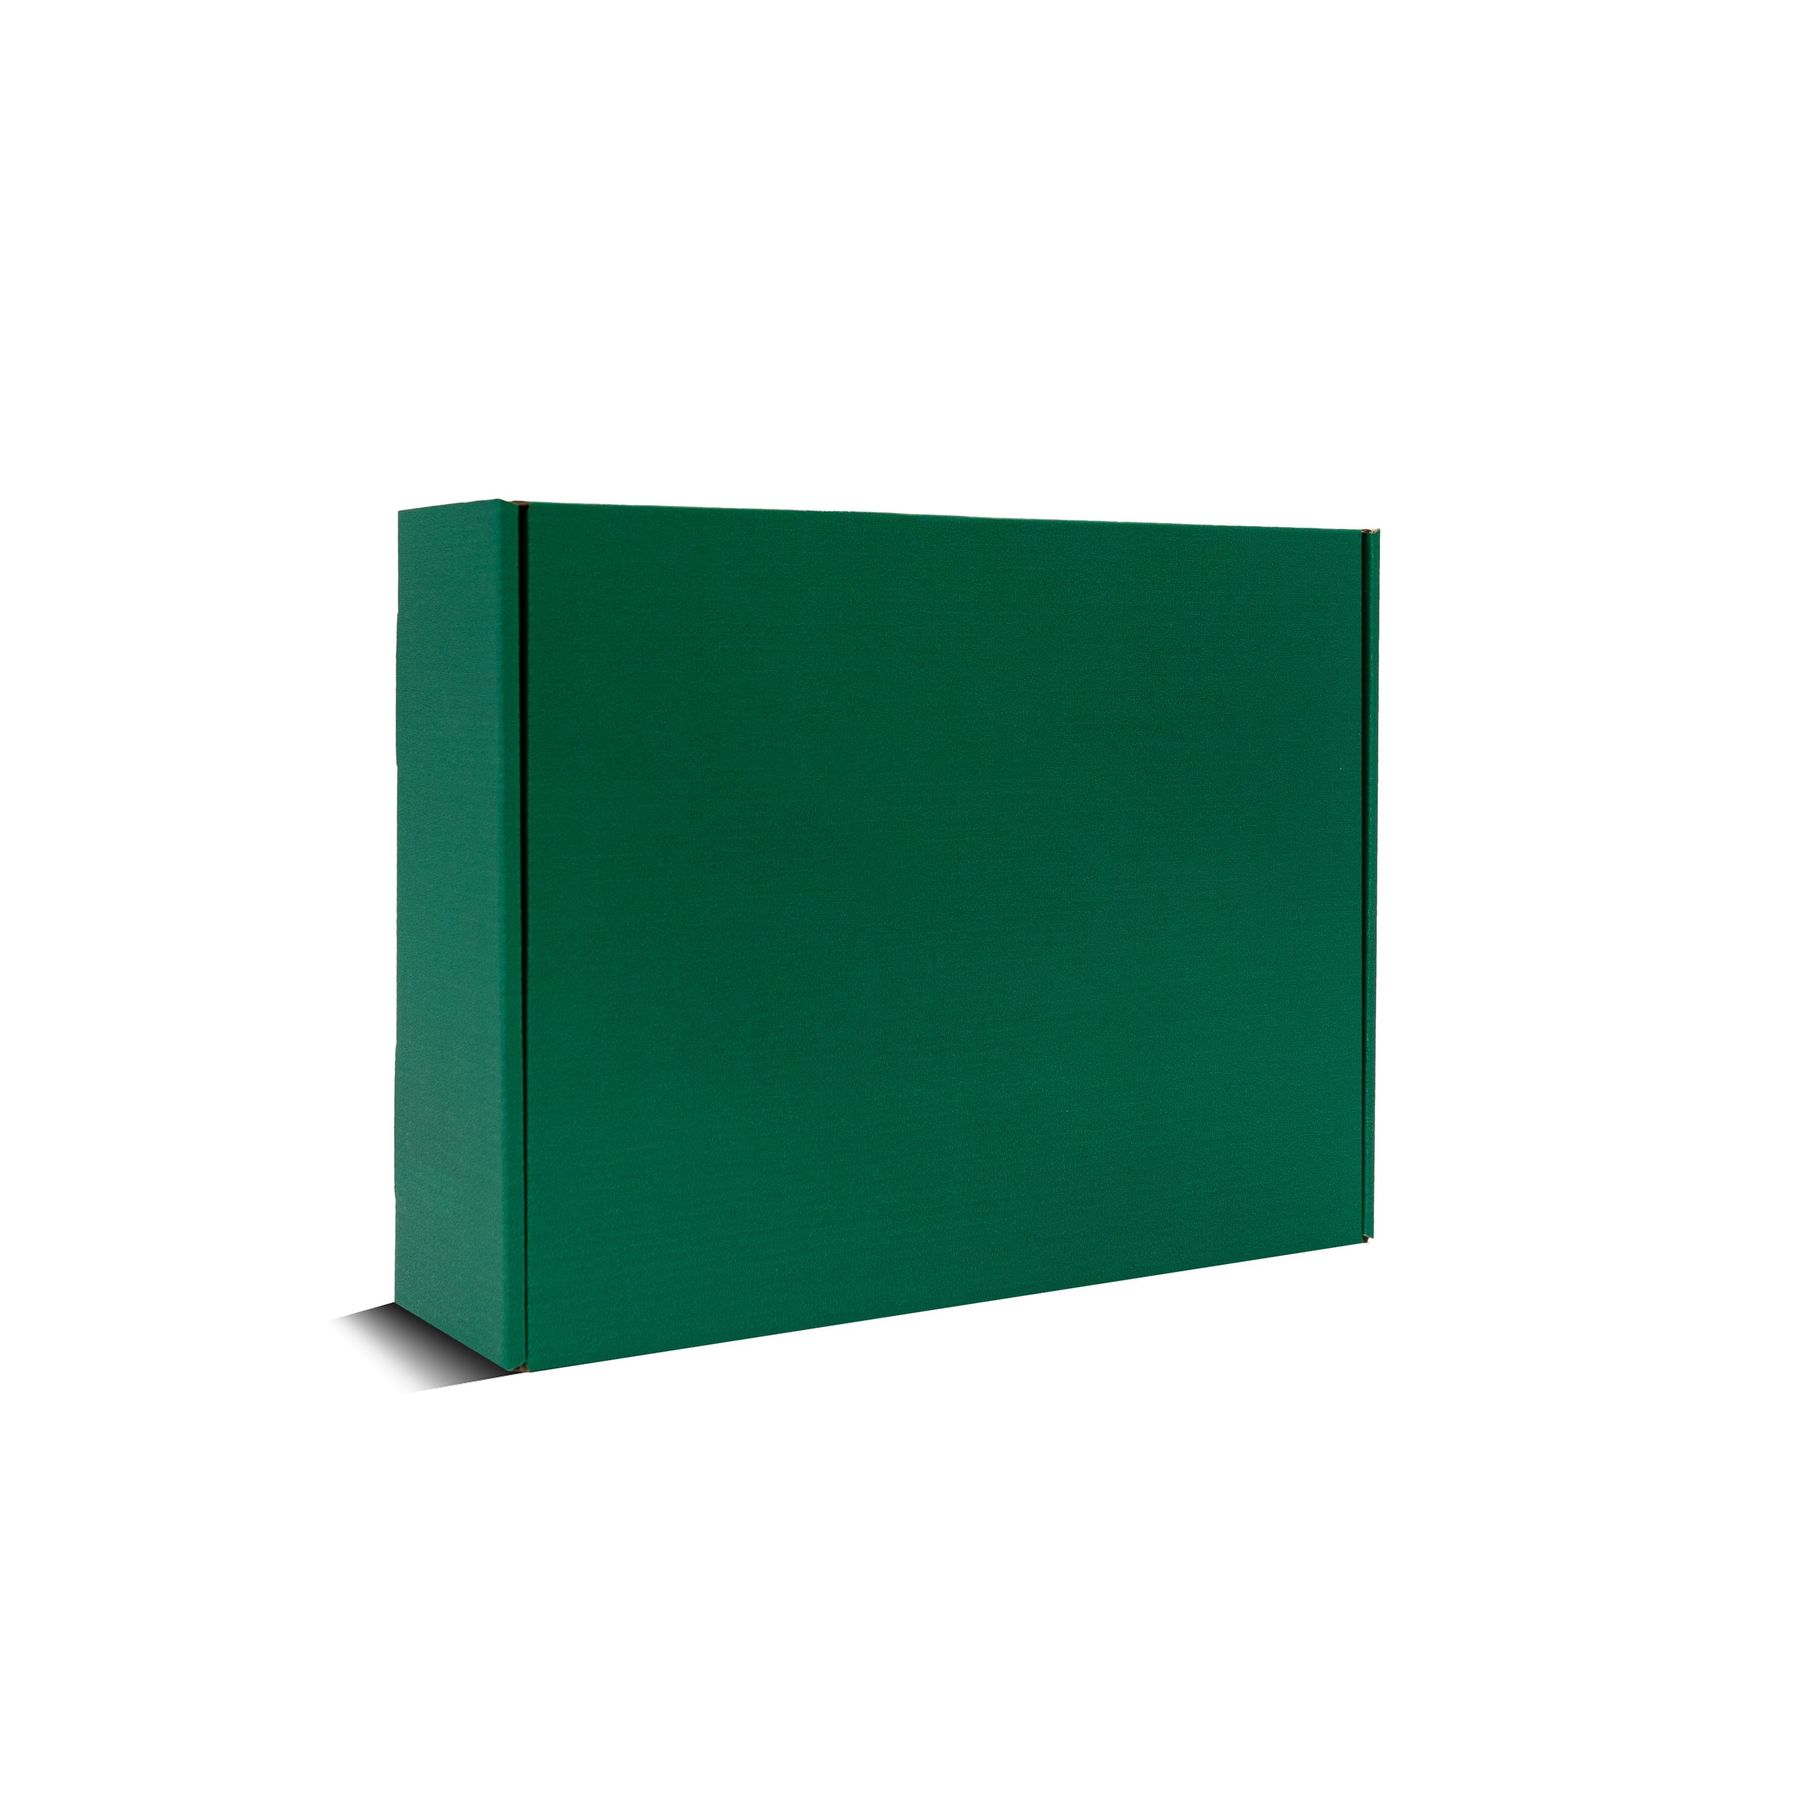 Green cardboard gift box with logo - 30-24-9